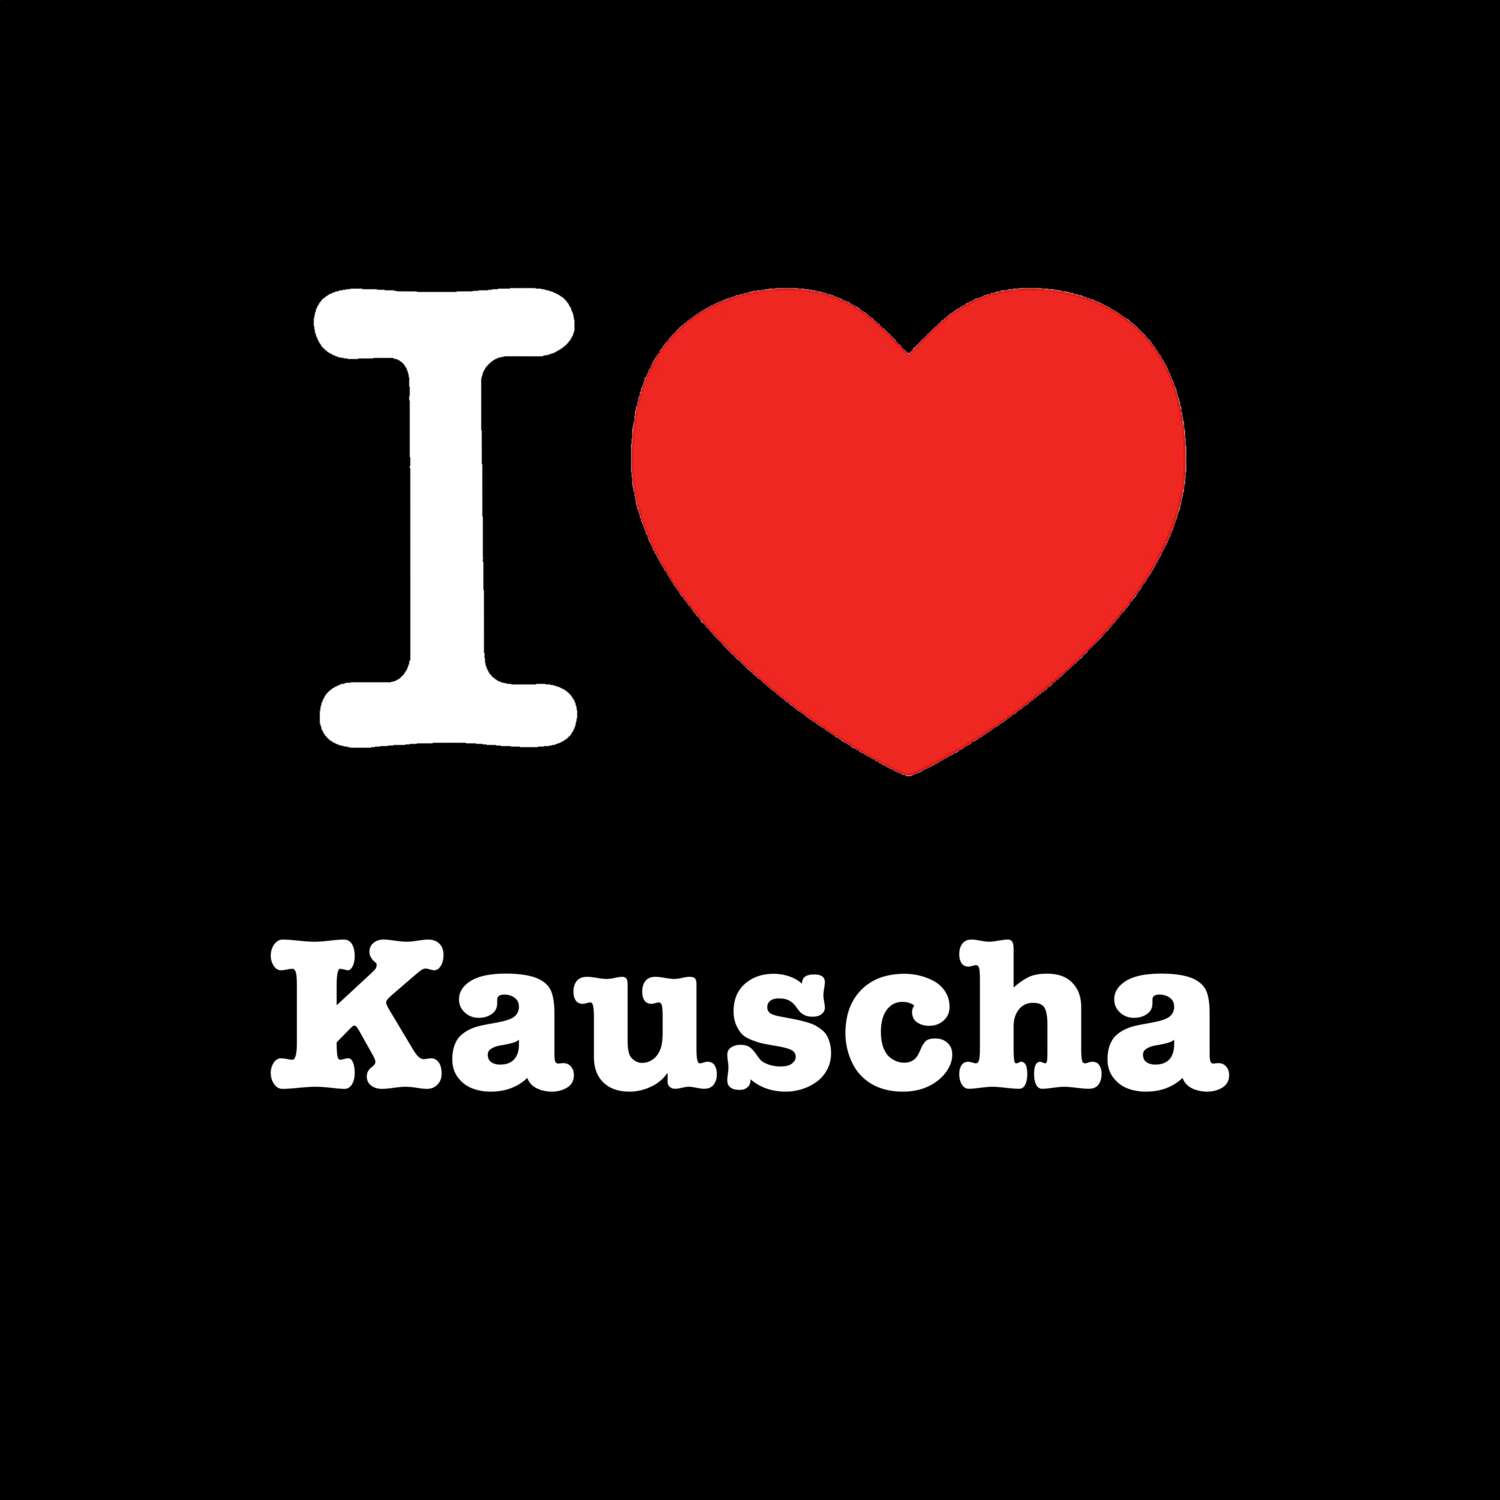 Kauscha T-Shirt »I love«